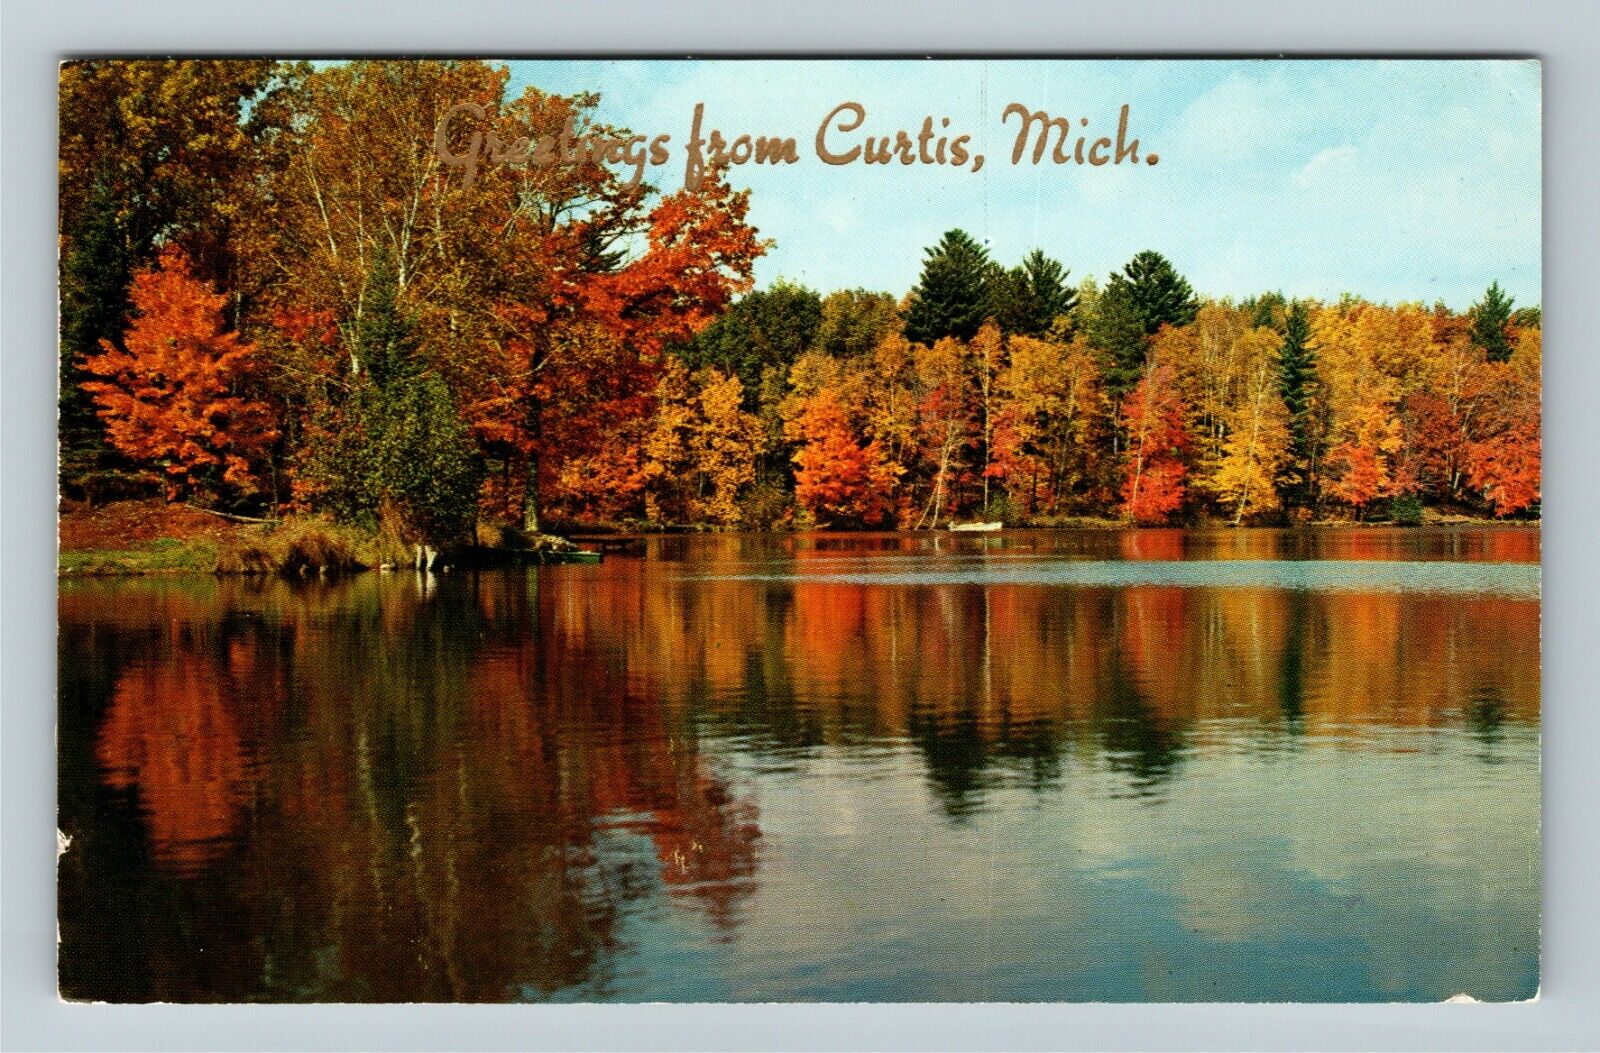 Curtis MI-Michigan, Scenic Greetings, Autumn Reflections Vintage Postcard